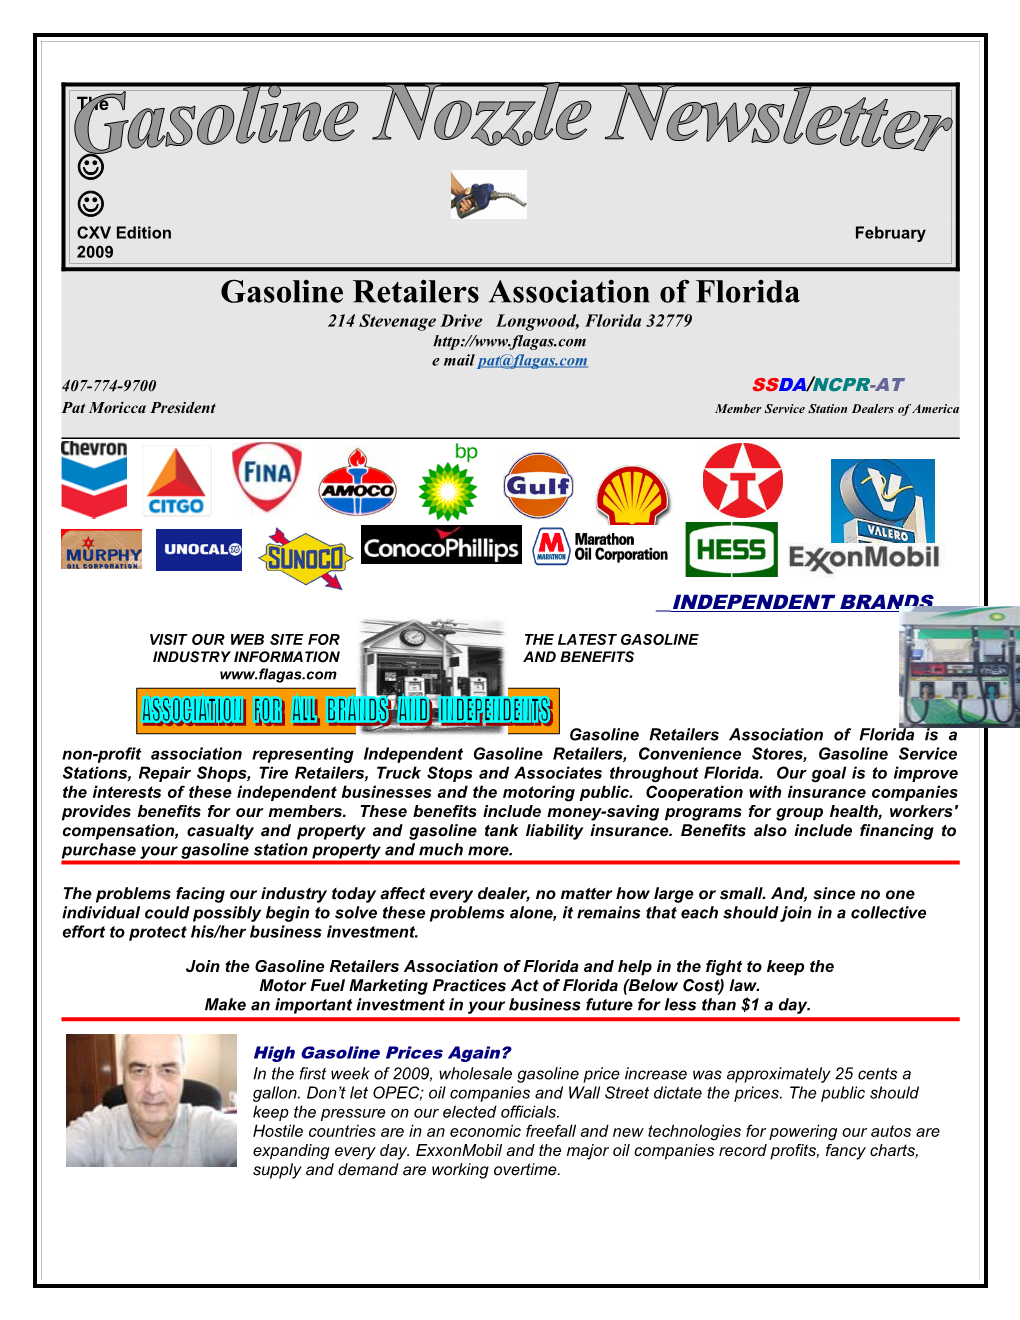 Gasoline Retailers Association of Florida